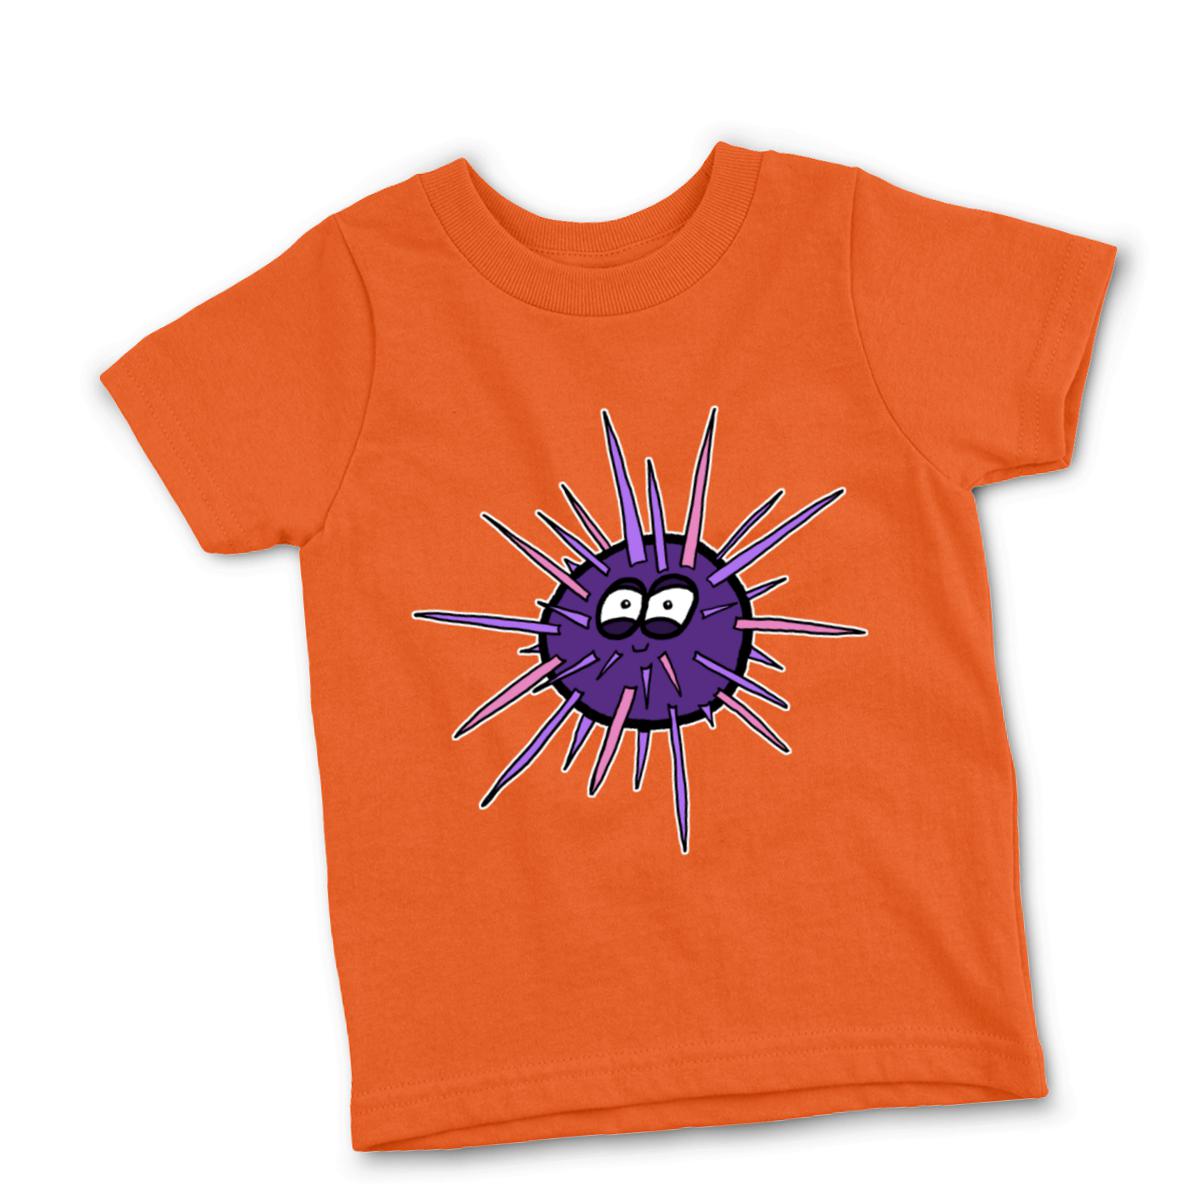 Sea Urchin Kid's Tee Small orange